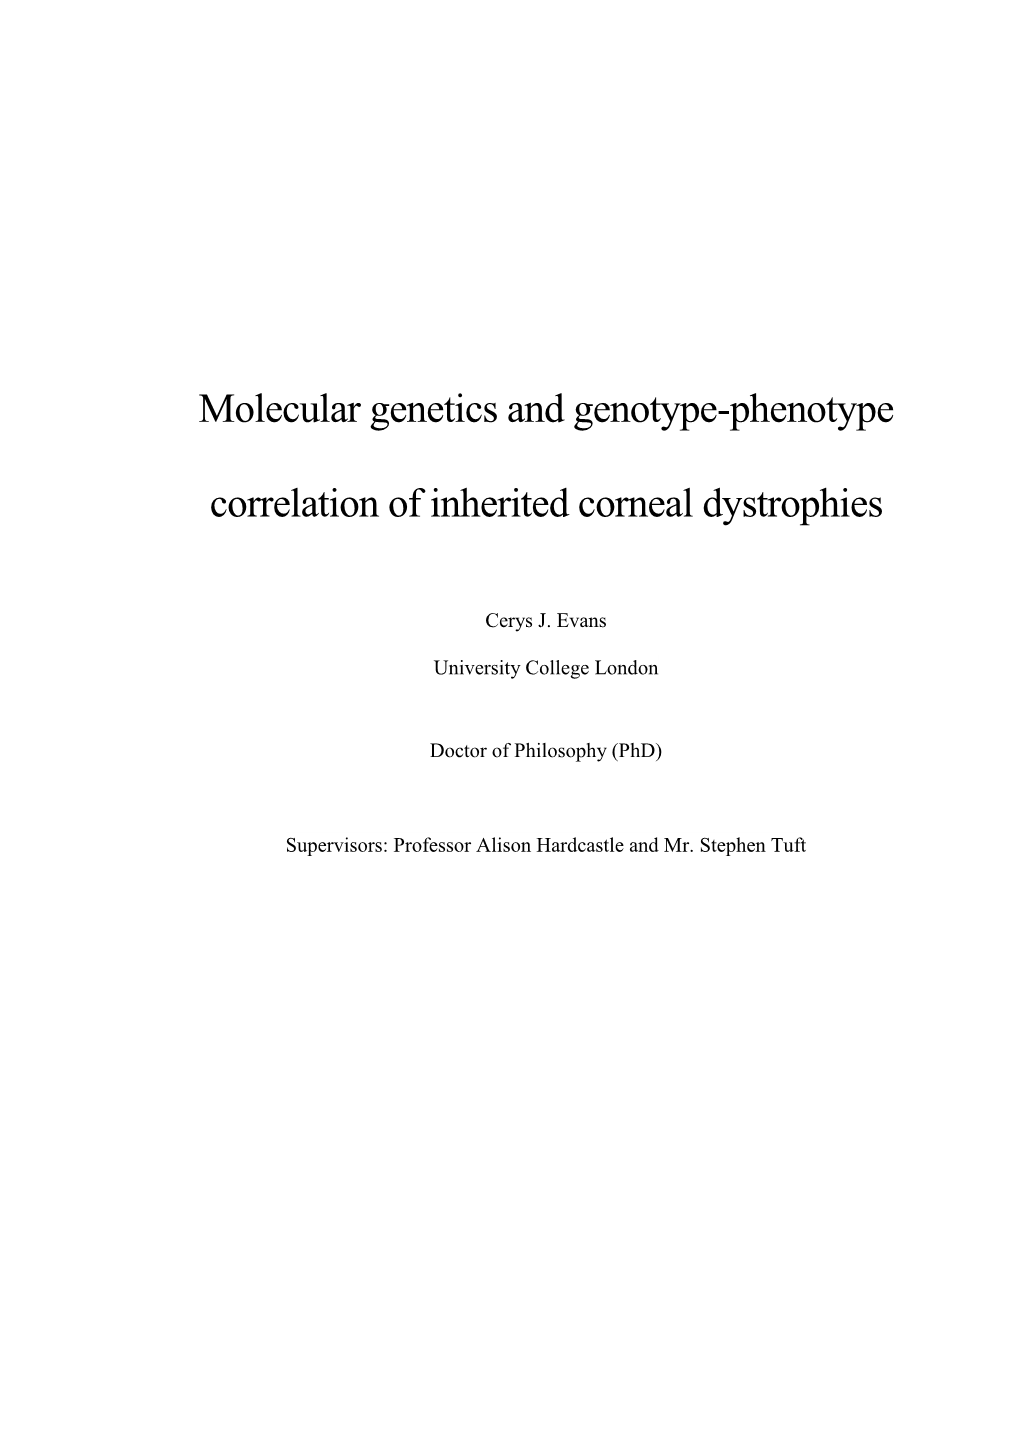 Molecular Genetics and Genotype-Phenotype Correlation Of